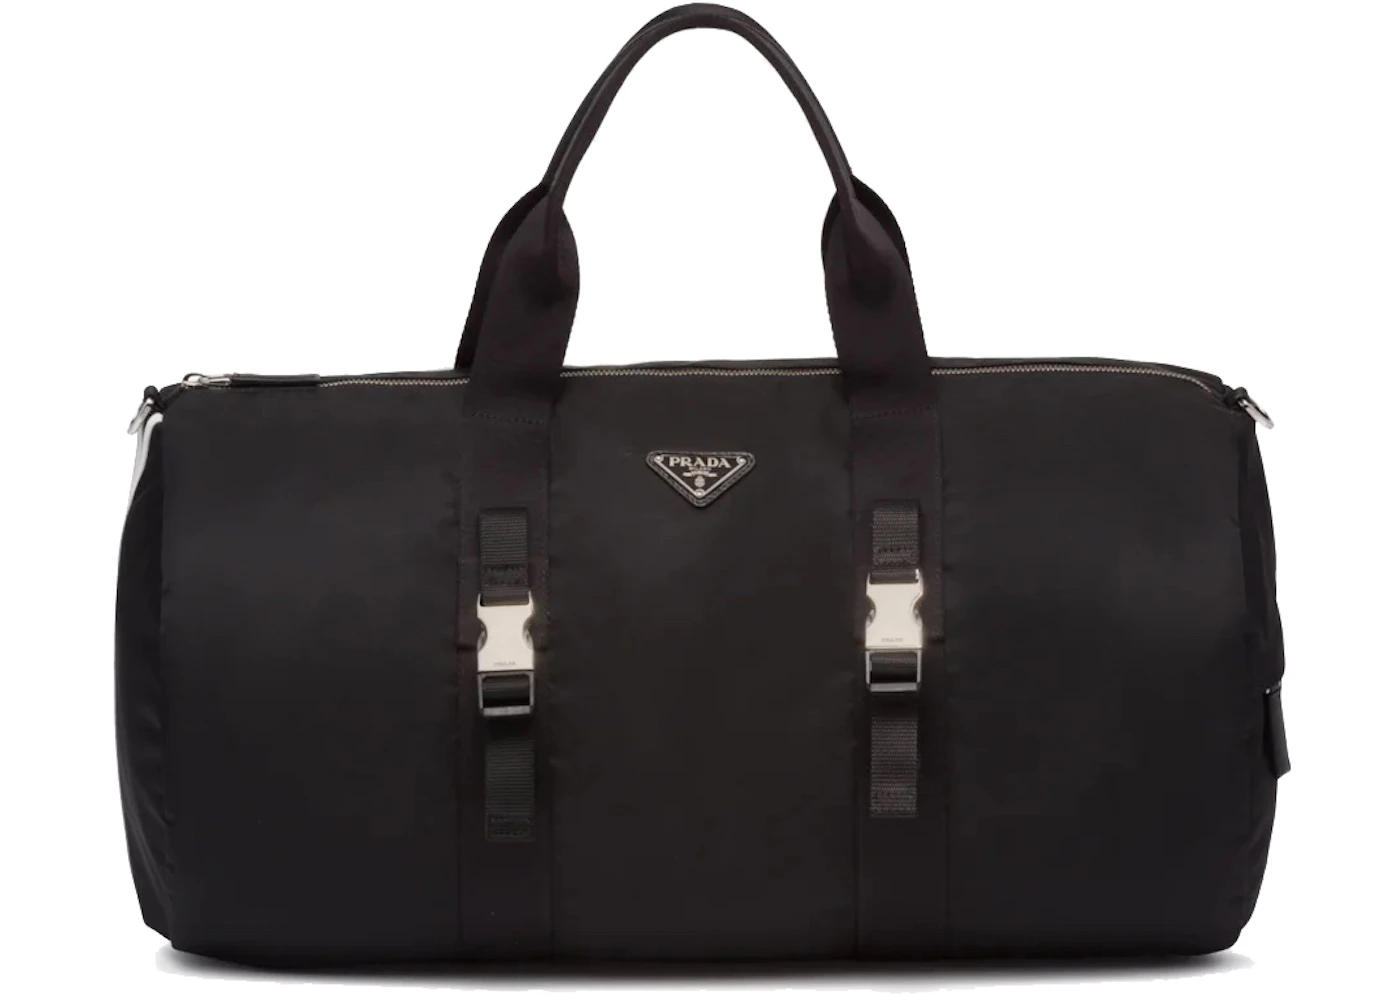 Prada adidas Re-Nylon Duffle Bag Black in Nylon/Leather with Silver ...